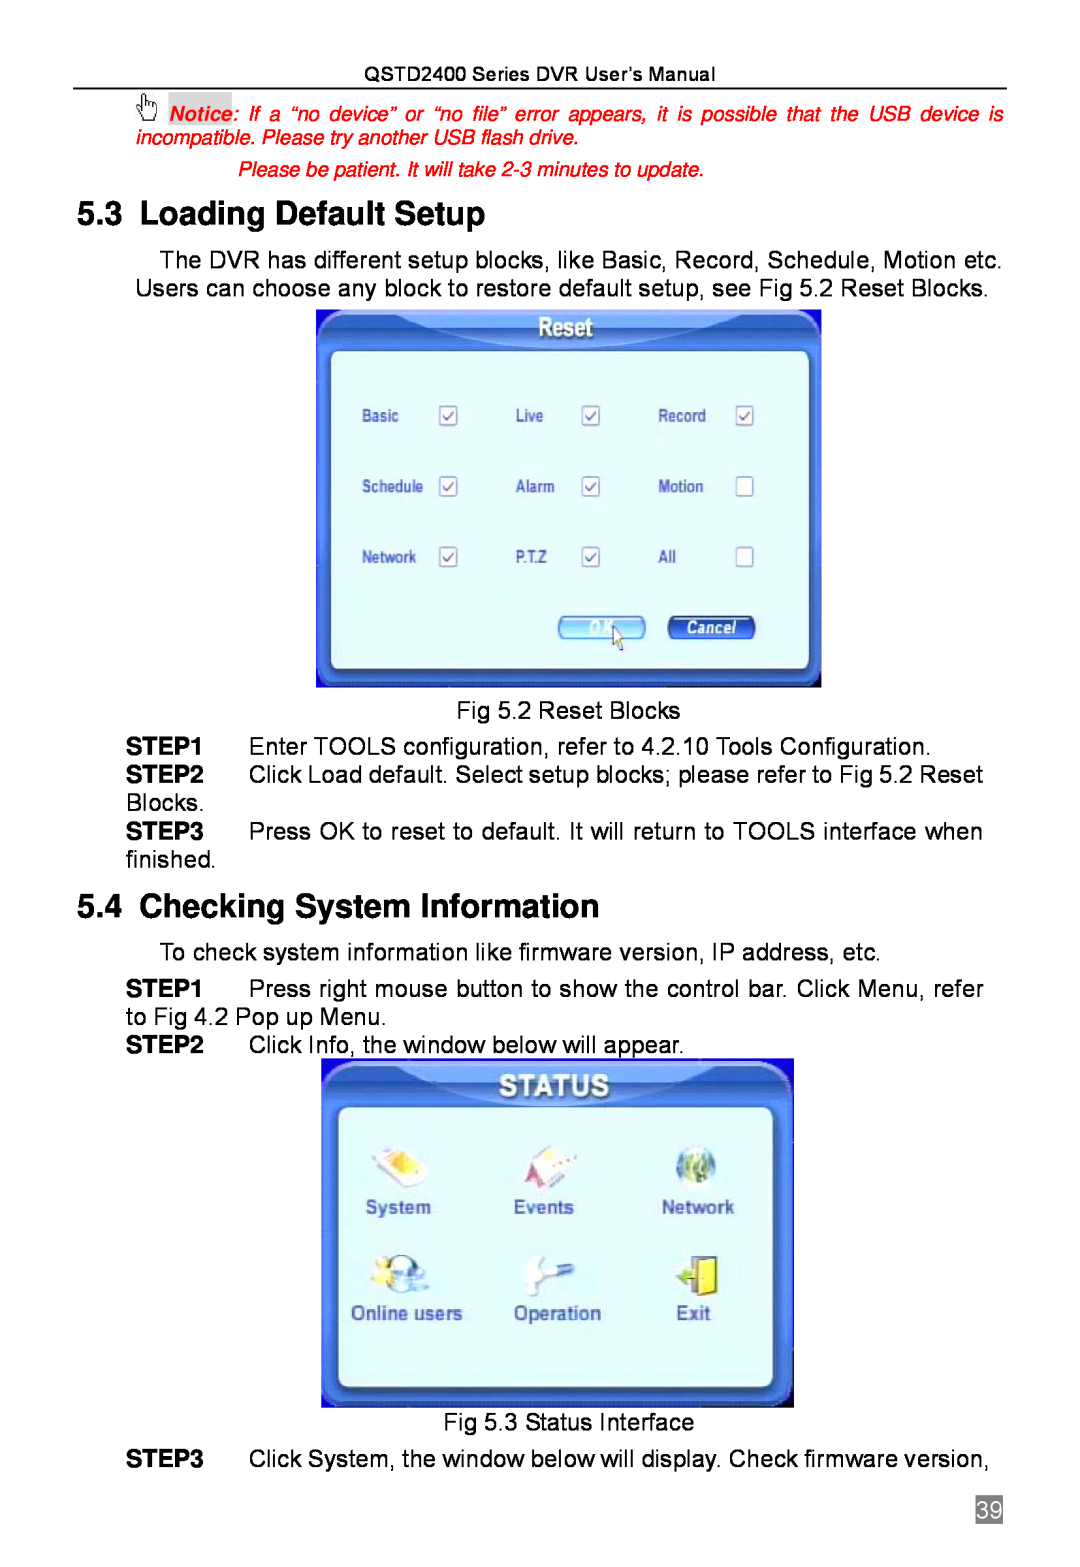 Q-See QSTD2408, QSTD2416, QSTD2404 user manual Loading Default Setup, Checking System Information 